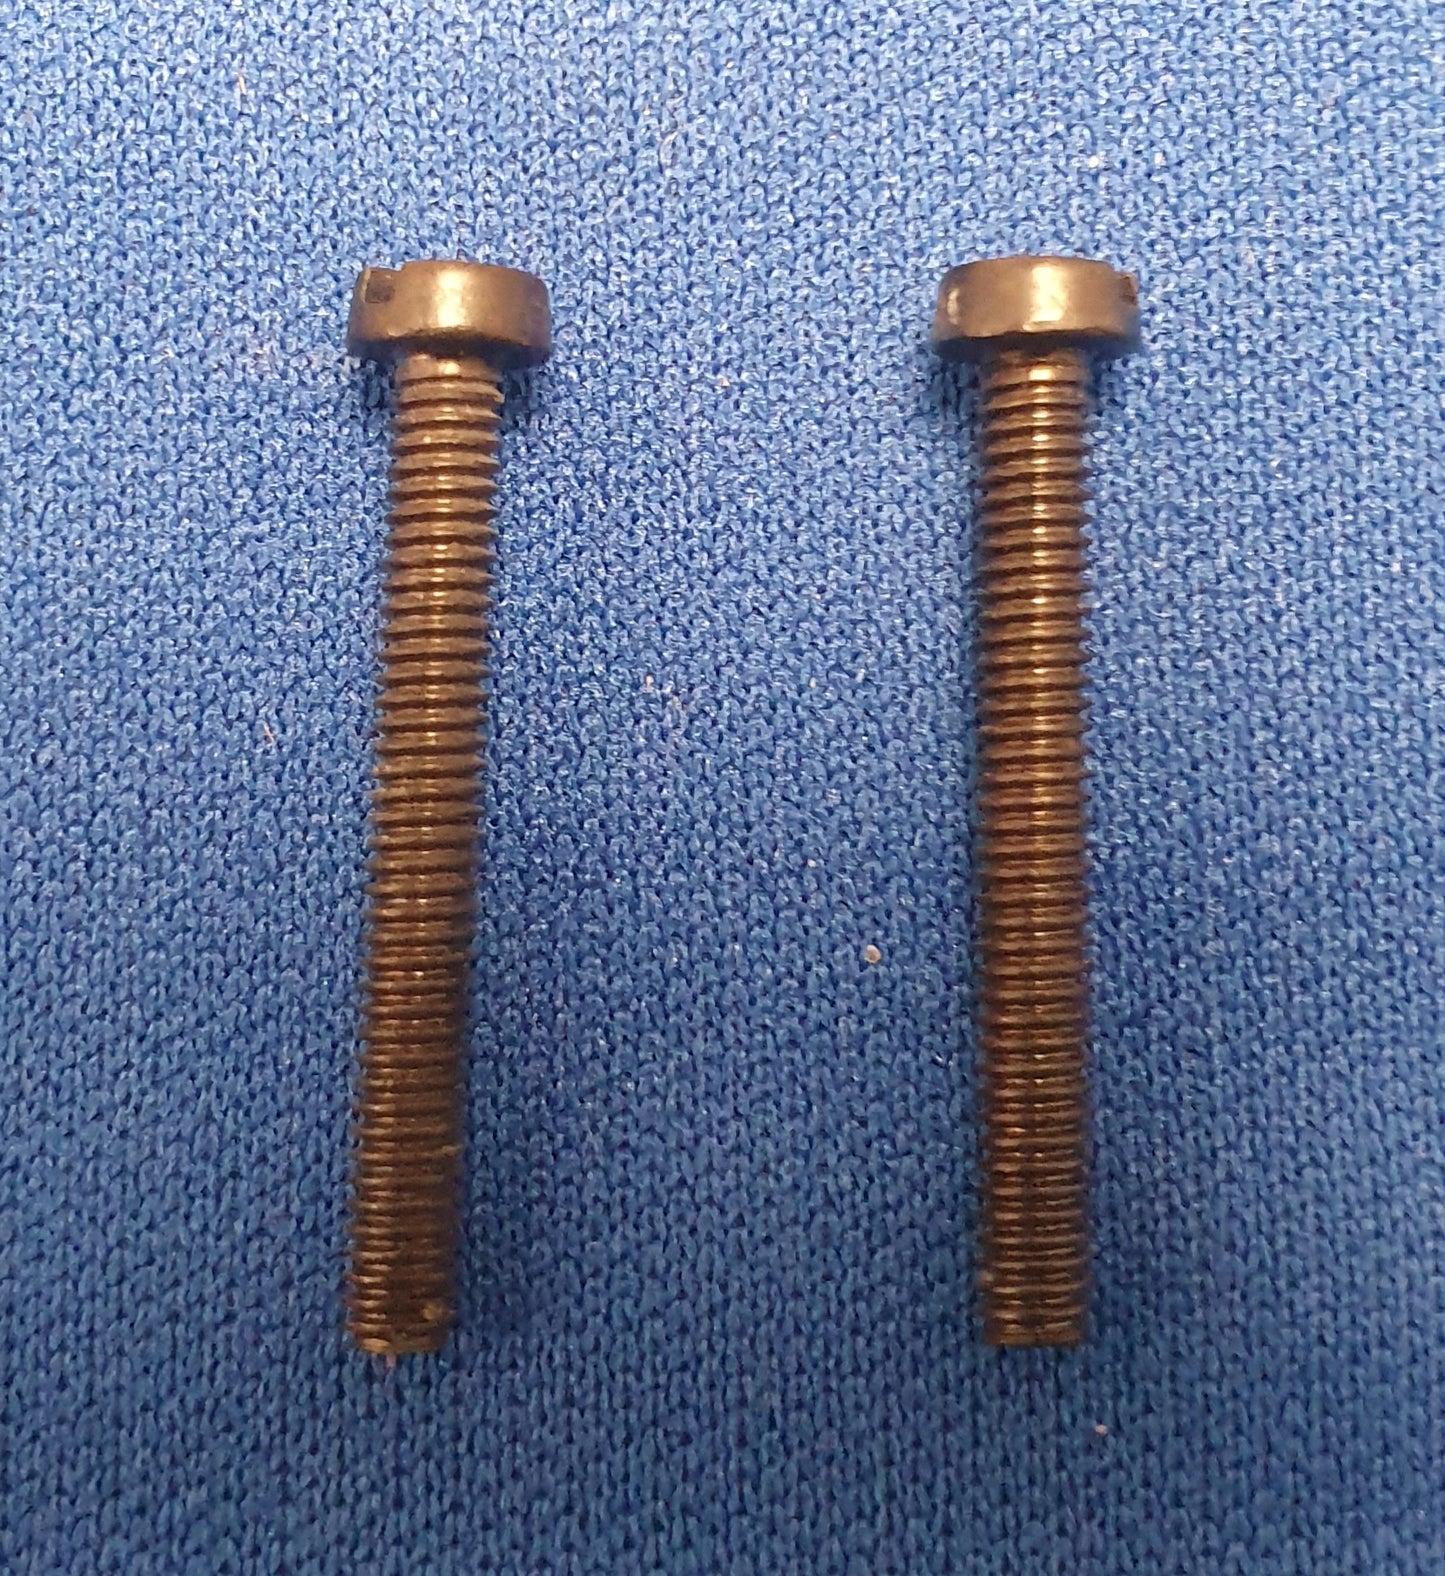 RL084 Gas valve securing screws.